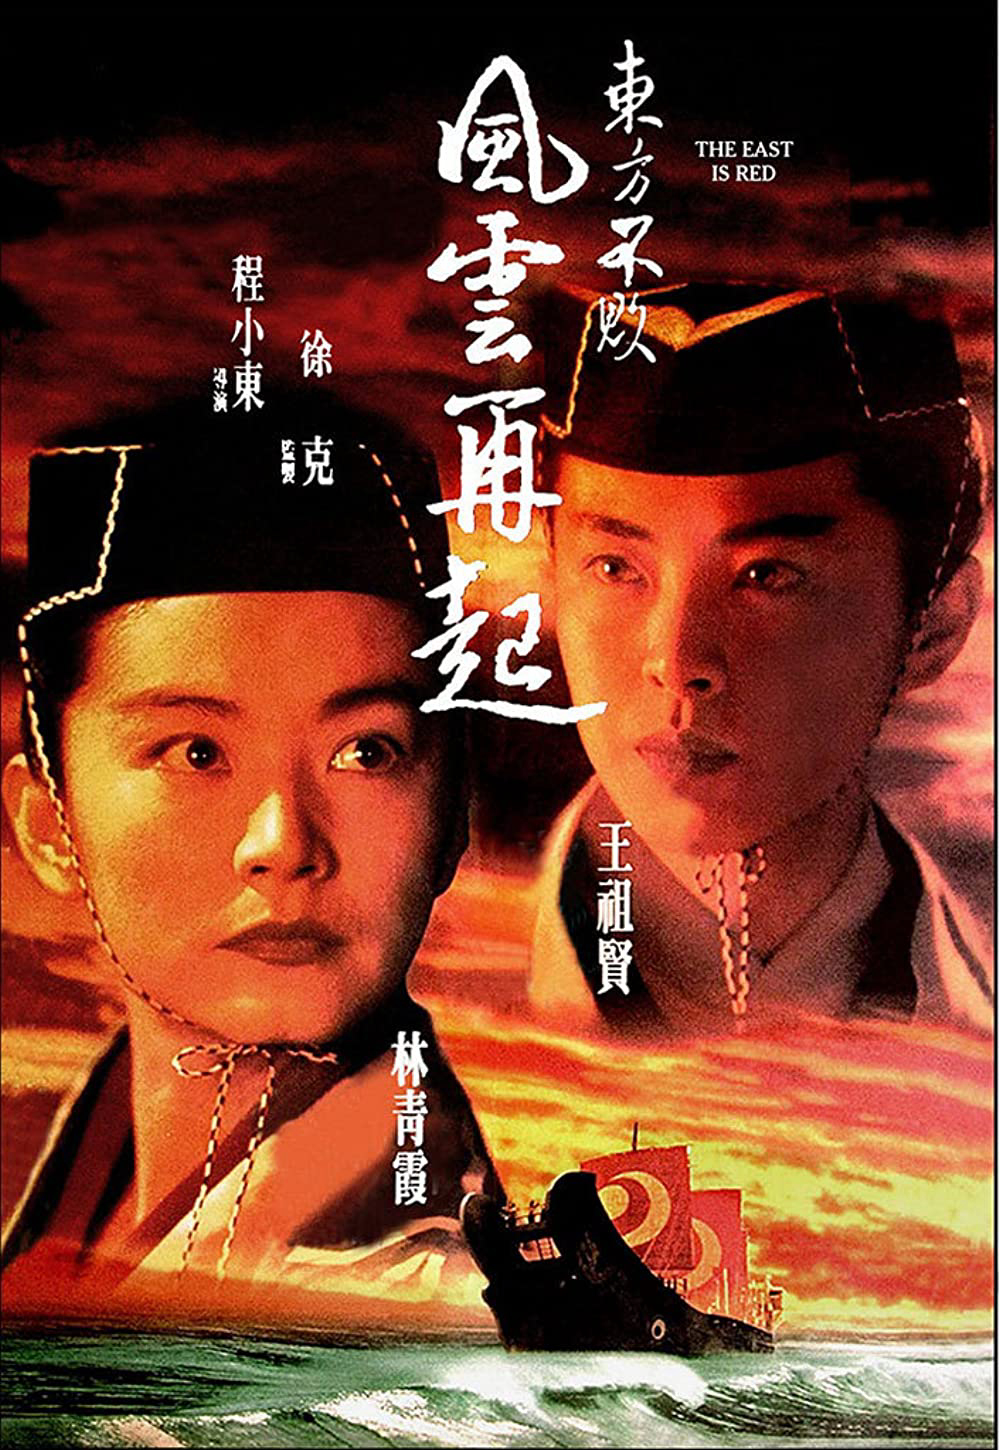 Poster Phim Tiếu Ngạo Giang Hồ 3 (Swordsman III: The East Is Red)